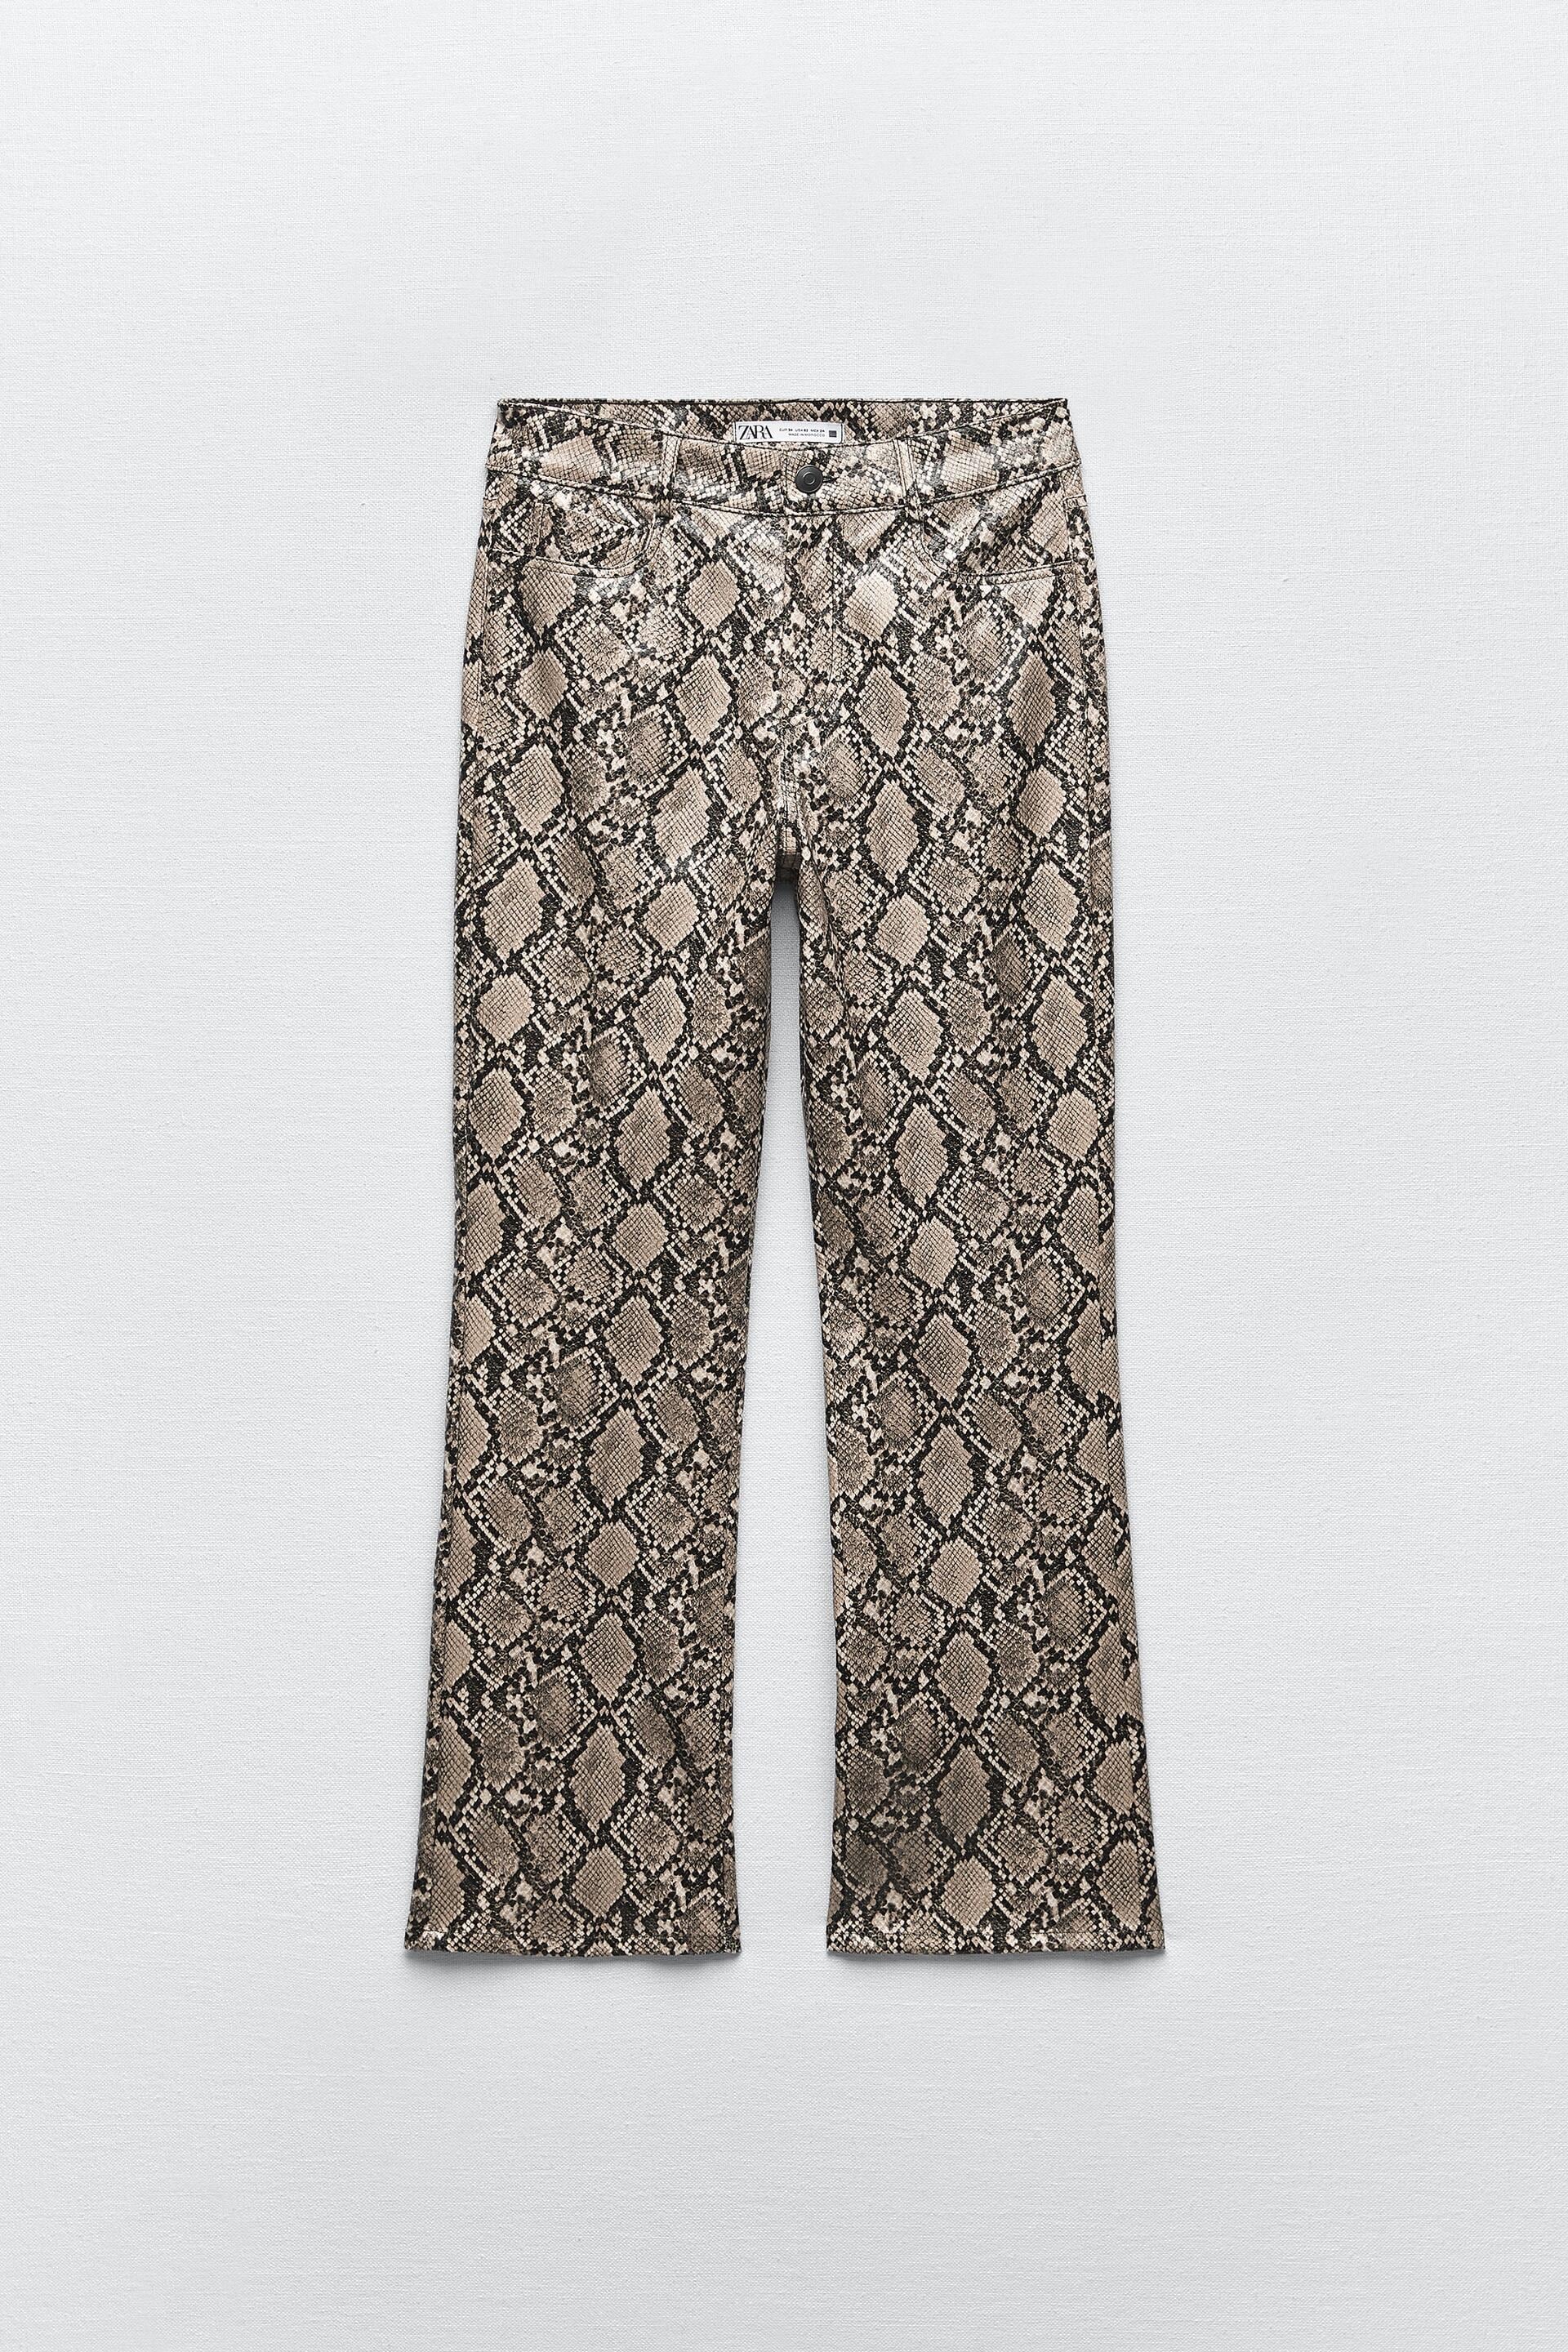 Zara Printed Pants